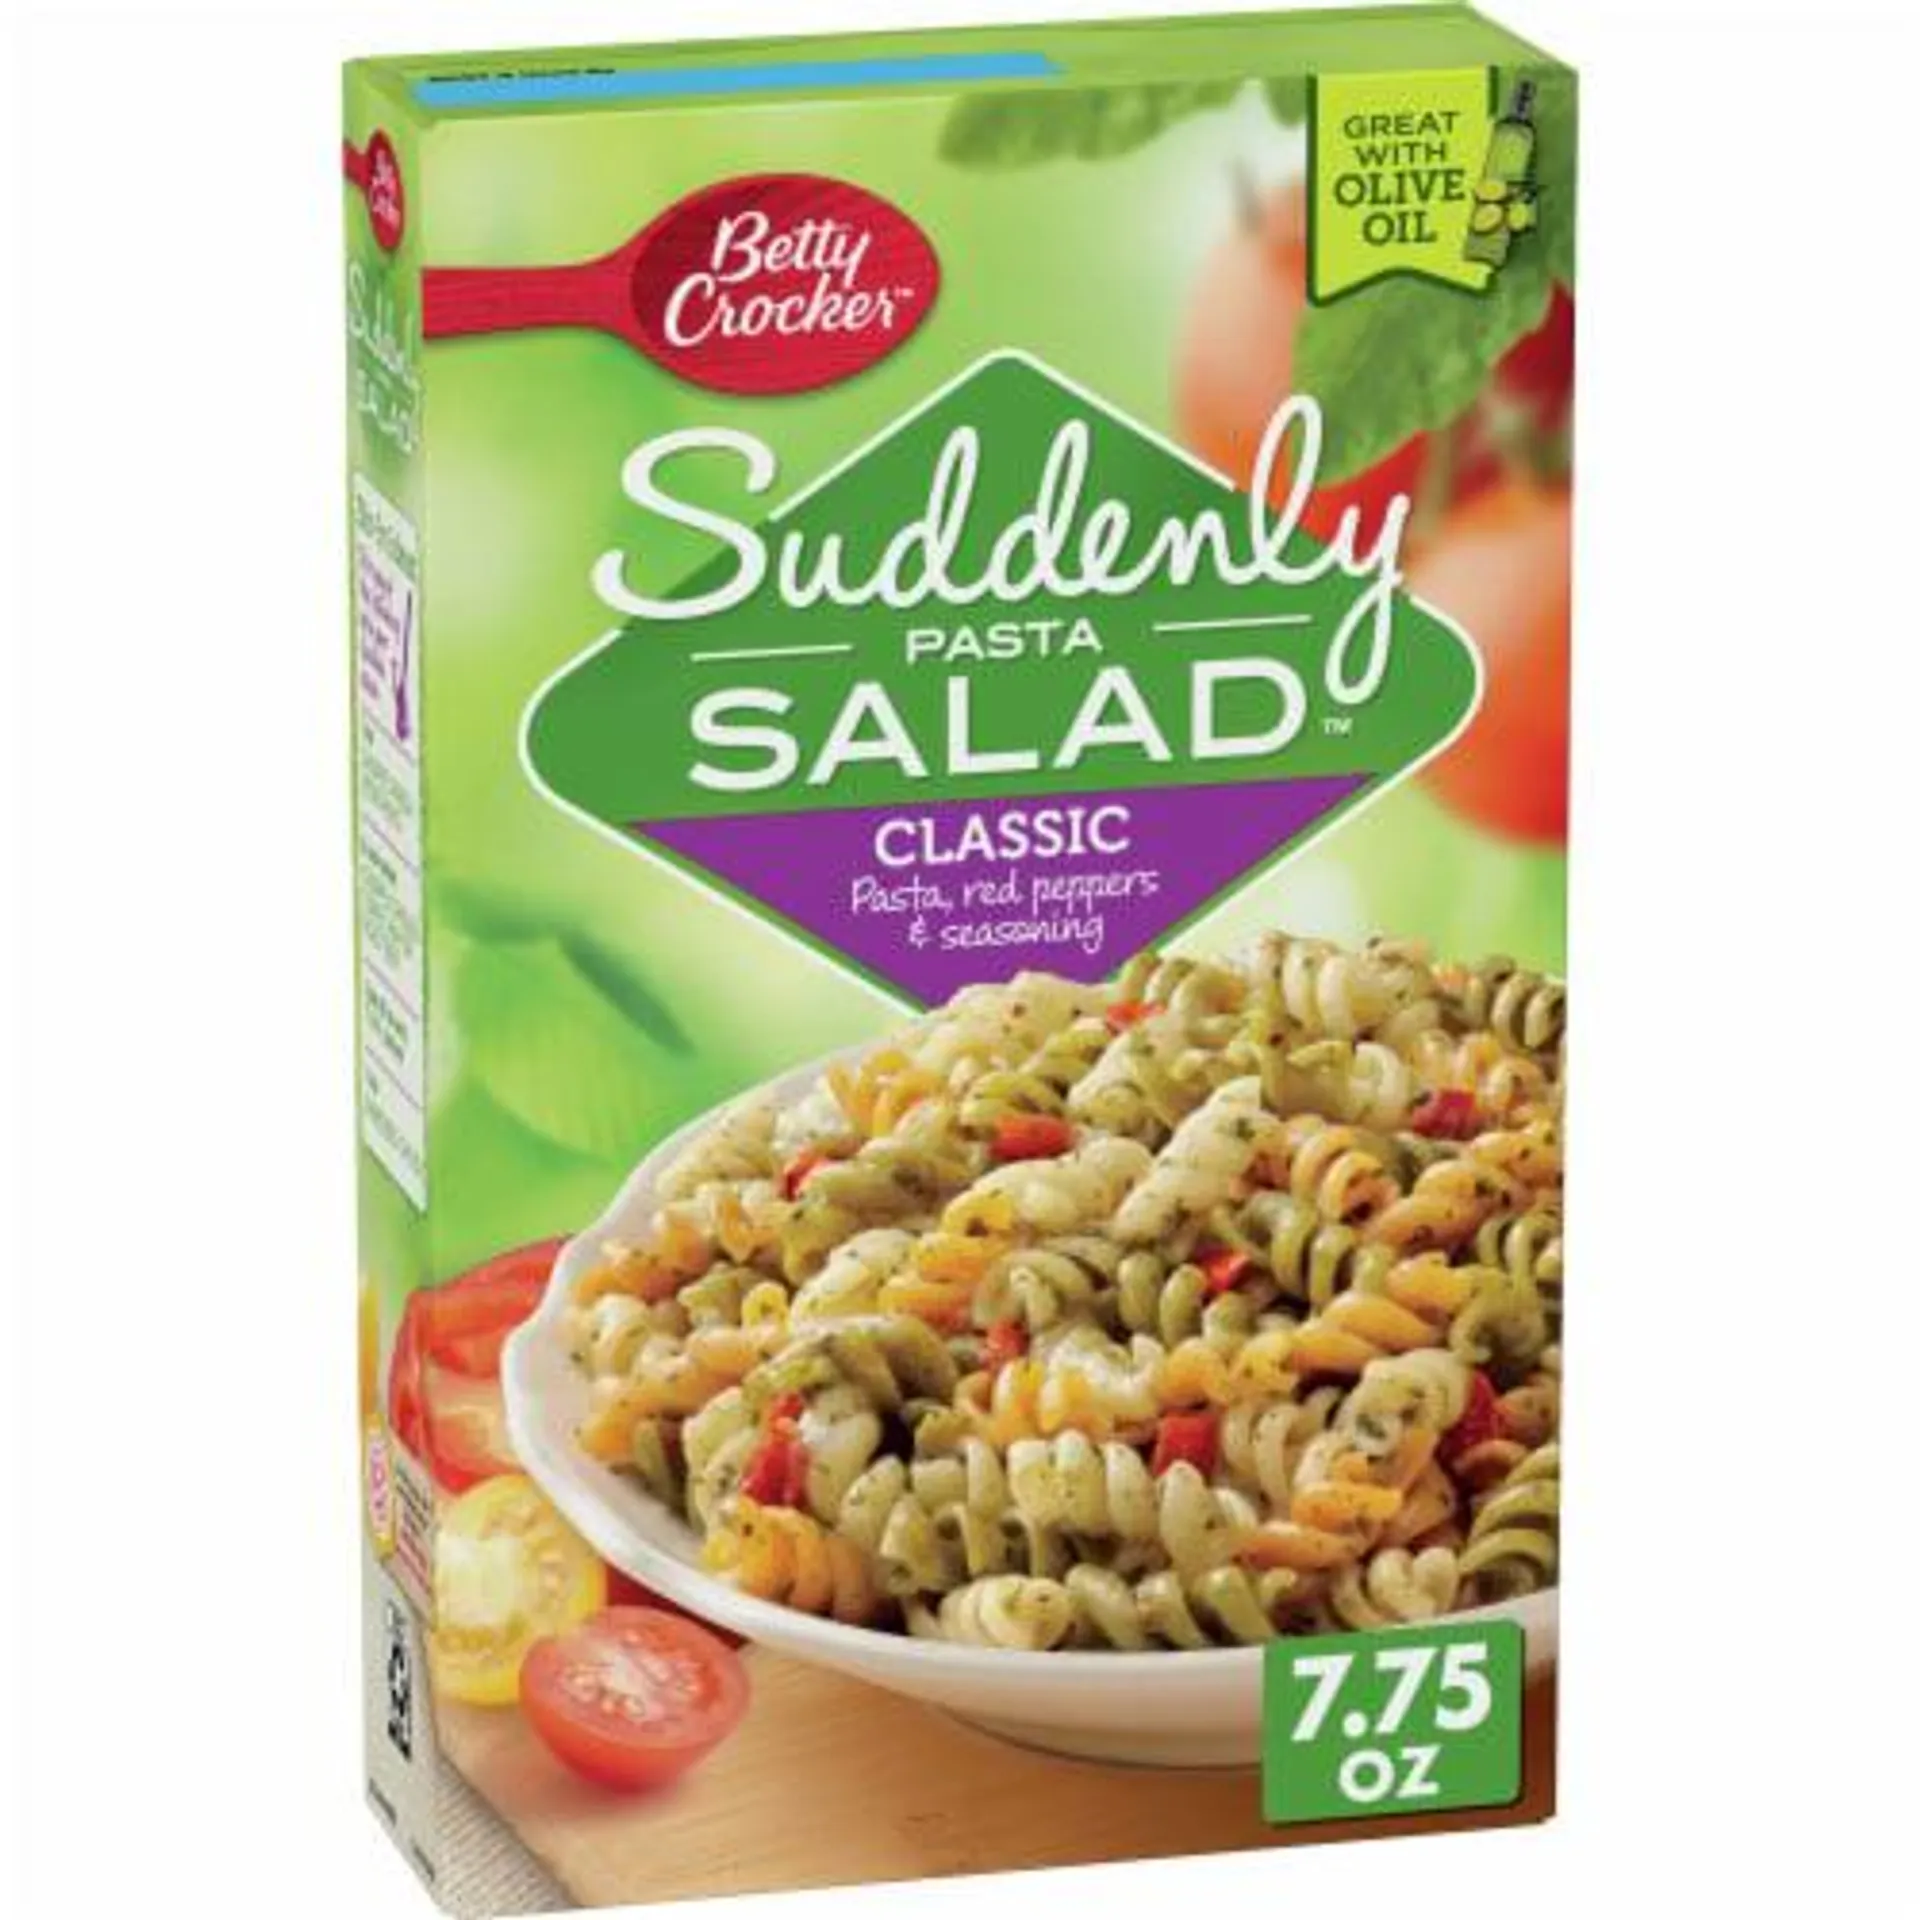 Betty Crocker™ Classic Suddenly Pasta Salad™